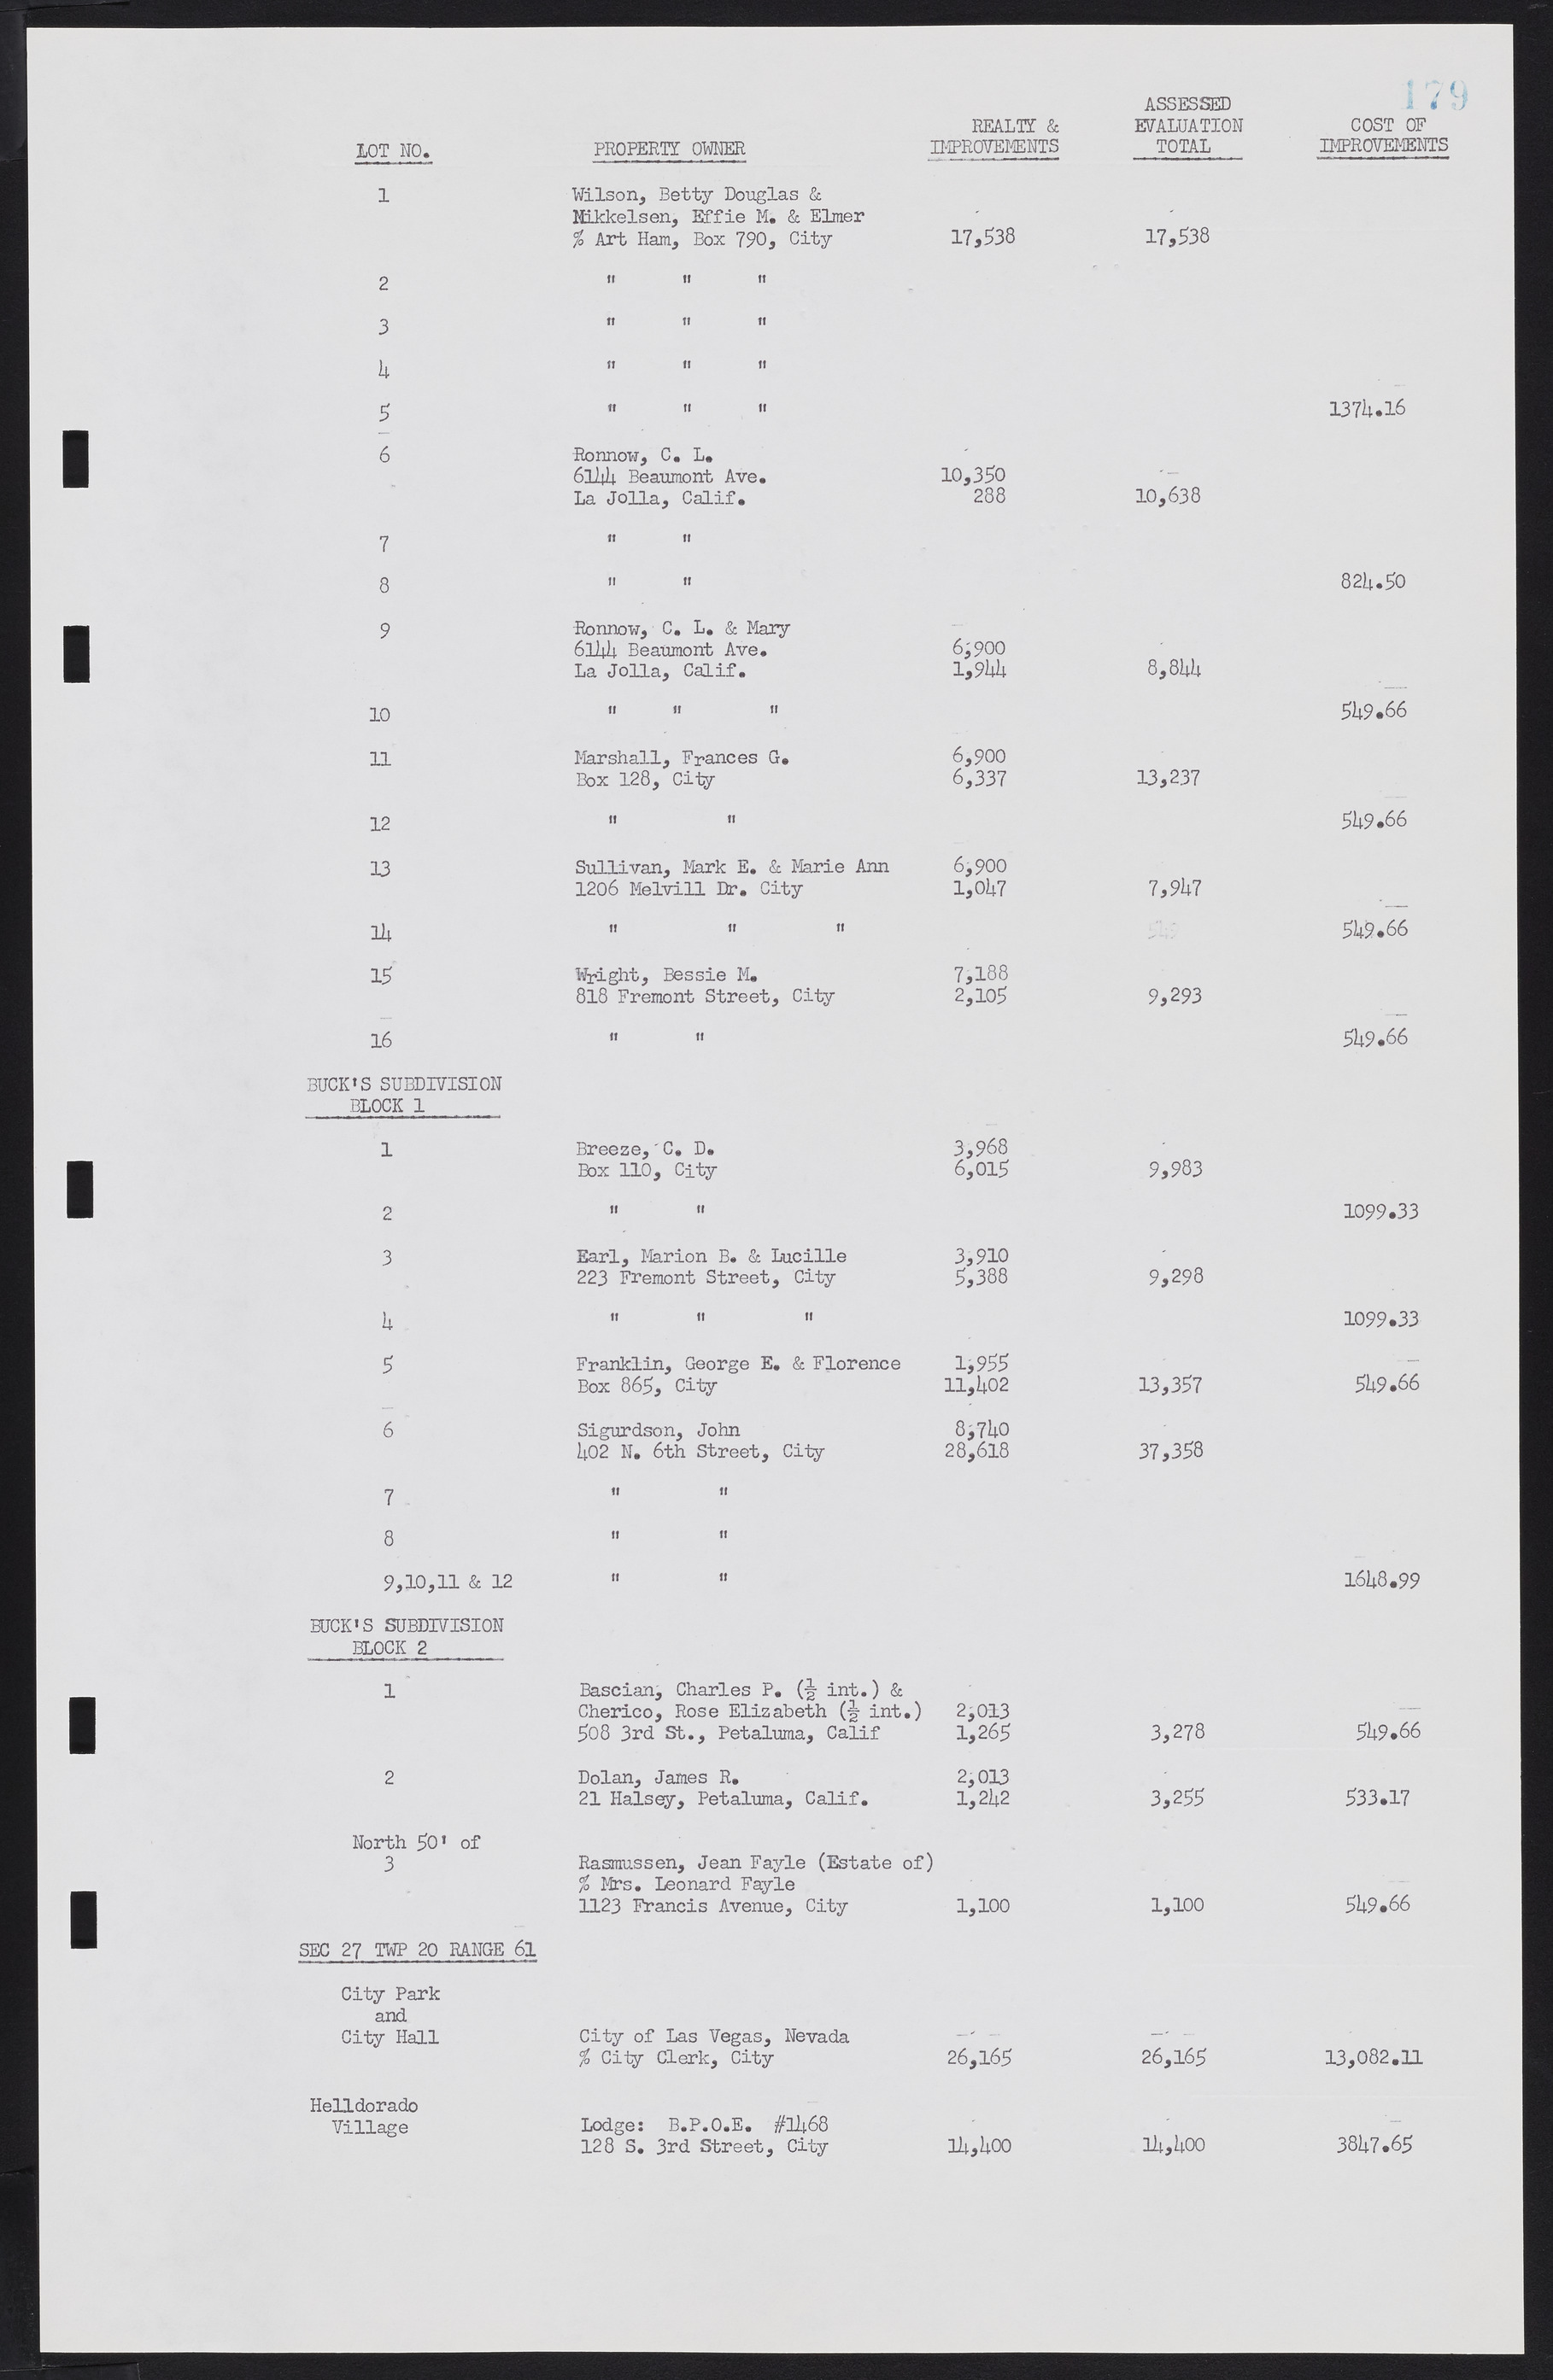 Las Vegas City Commission Minutes, February 17, 1954 to September 21, 1955, lvc000009-185